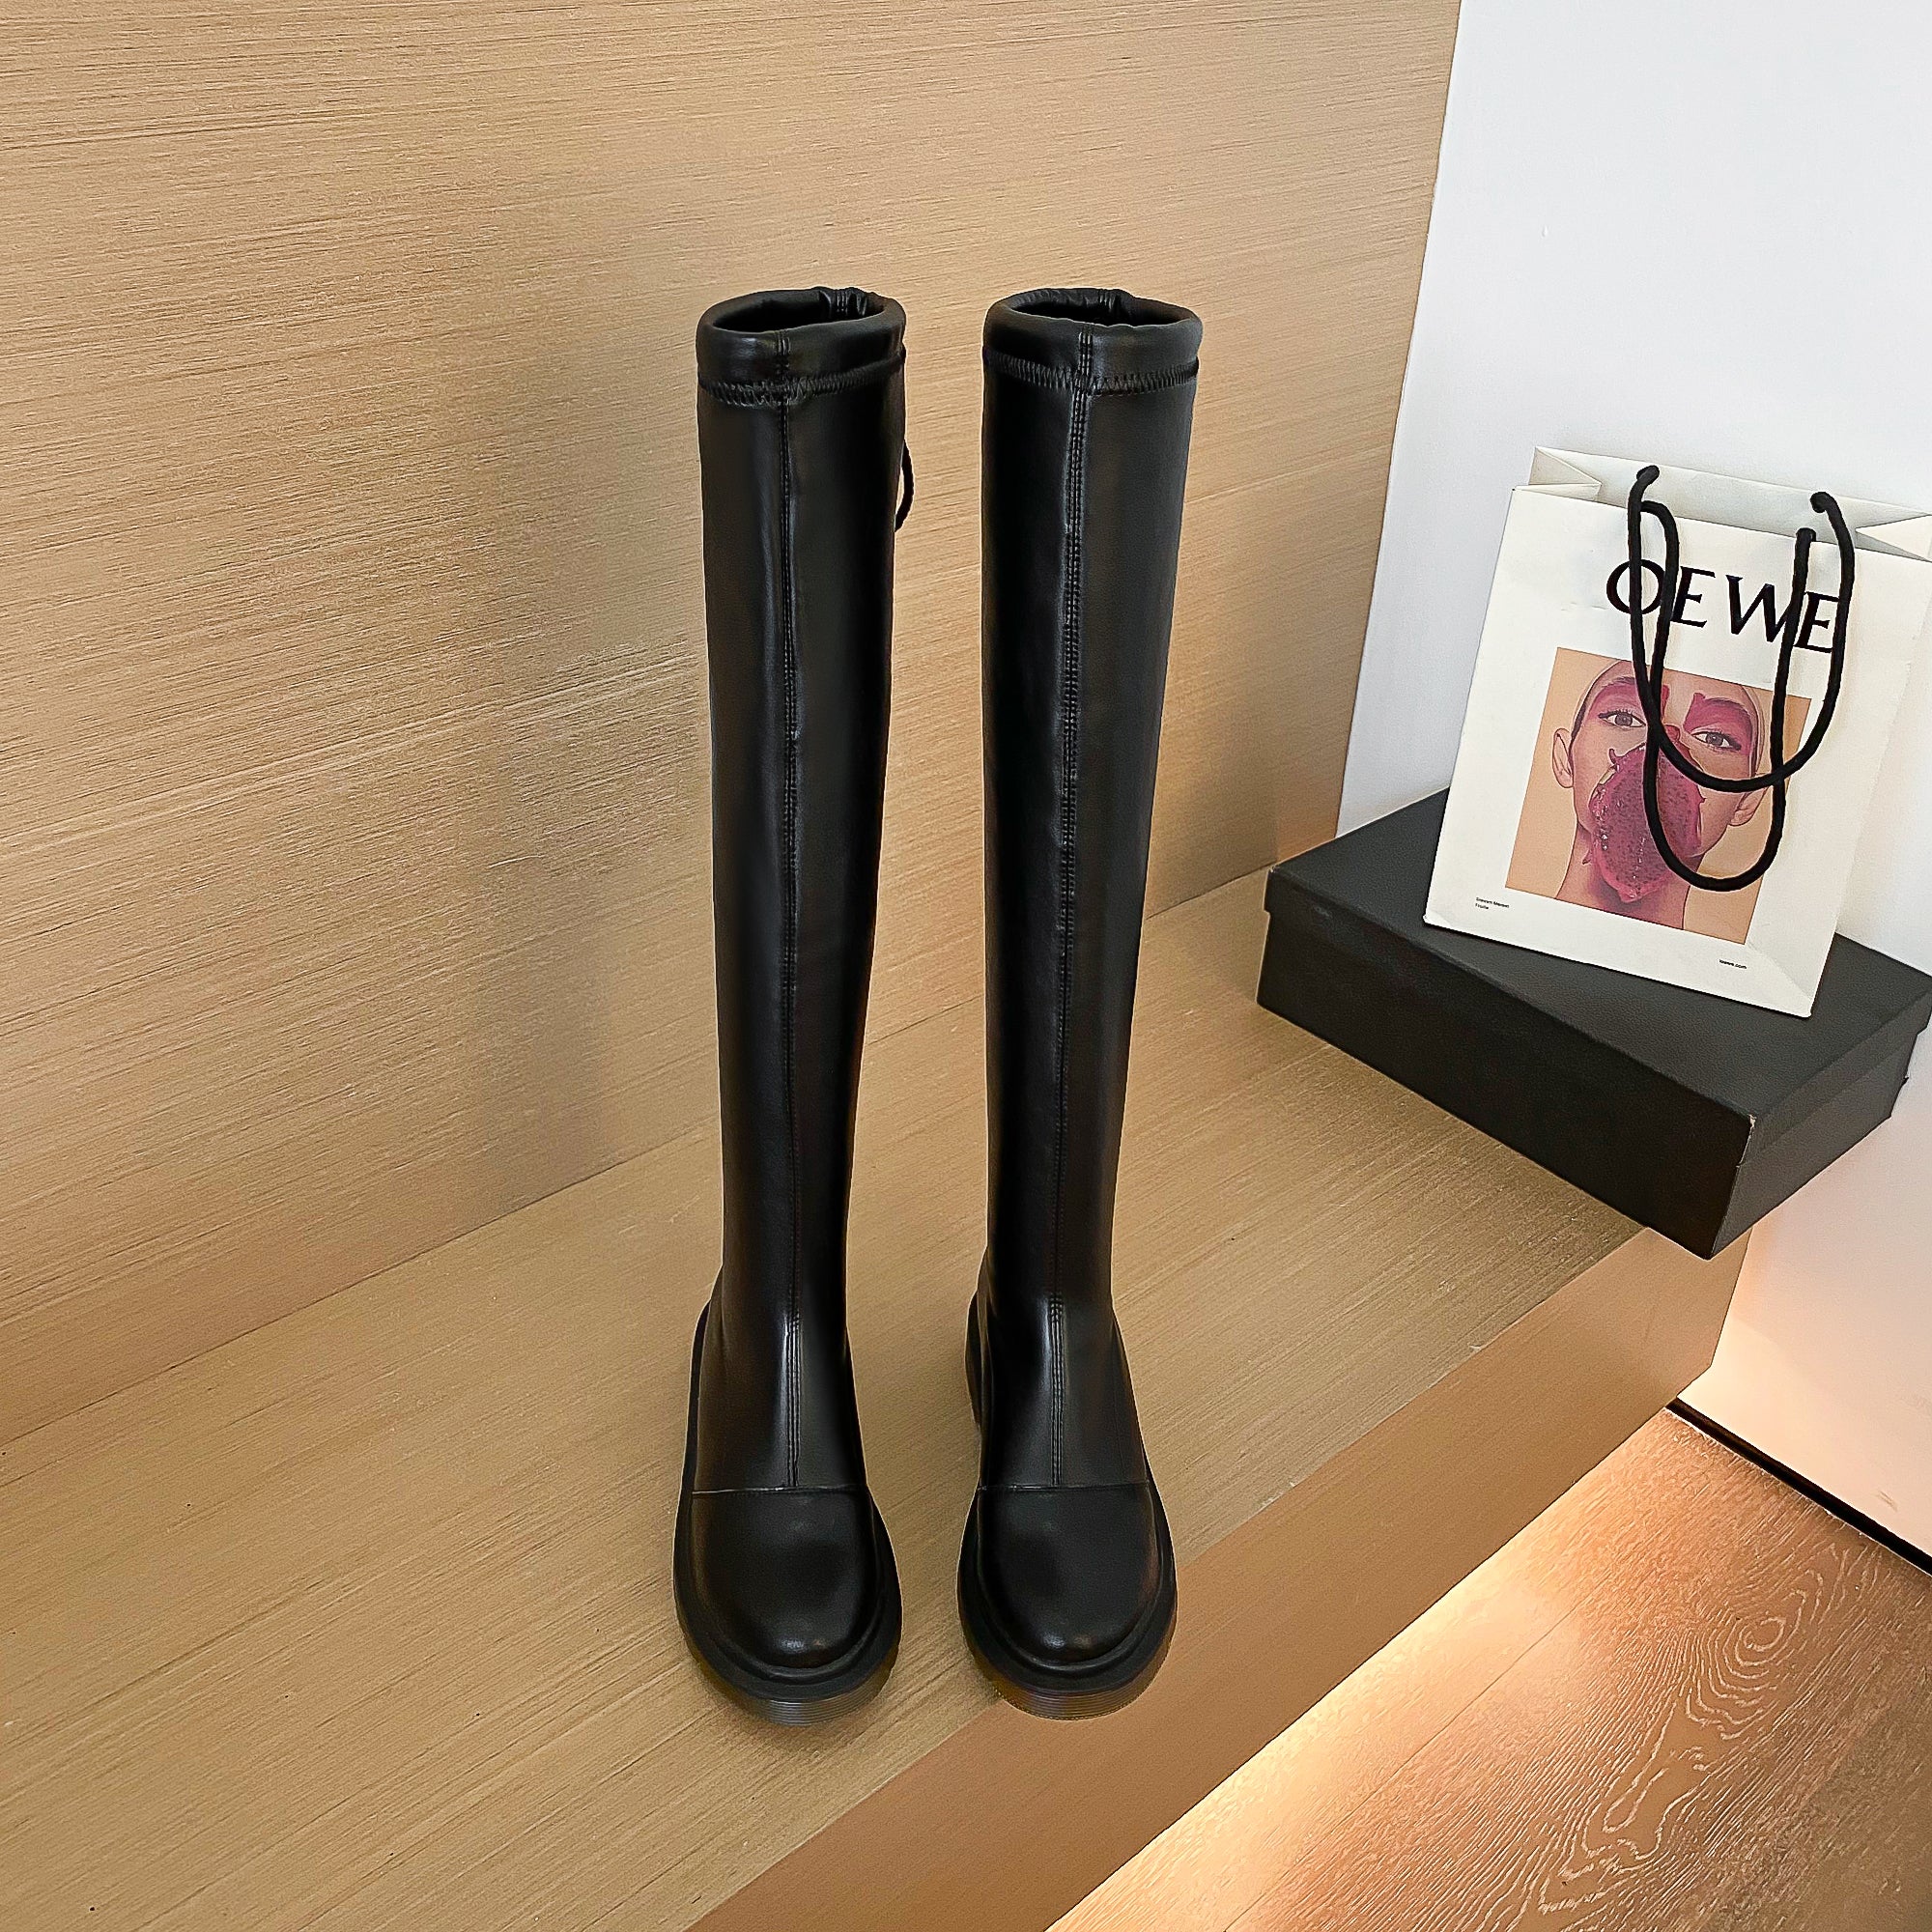 Bigsizeheels French Retro Tether Round Toe Boots - Black freeshipping - bigsizeheel®-size5-size15 -All Plus Sizes Available!